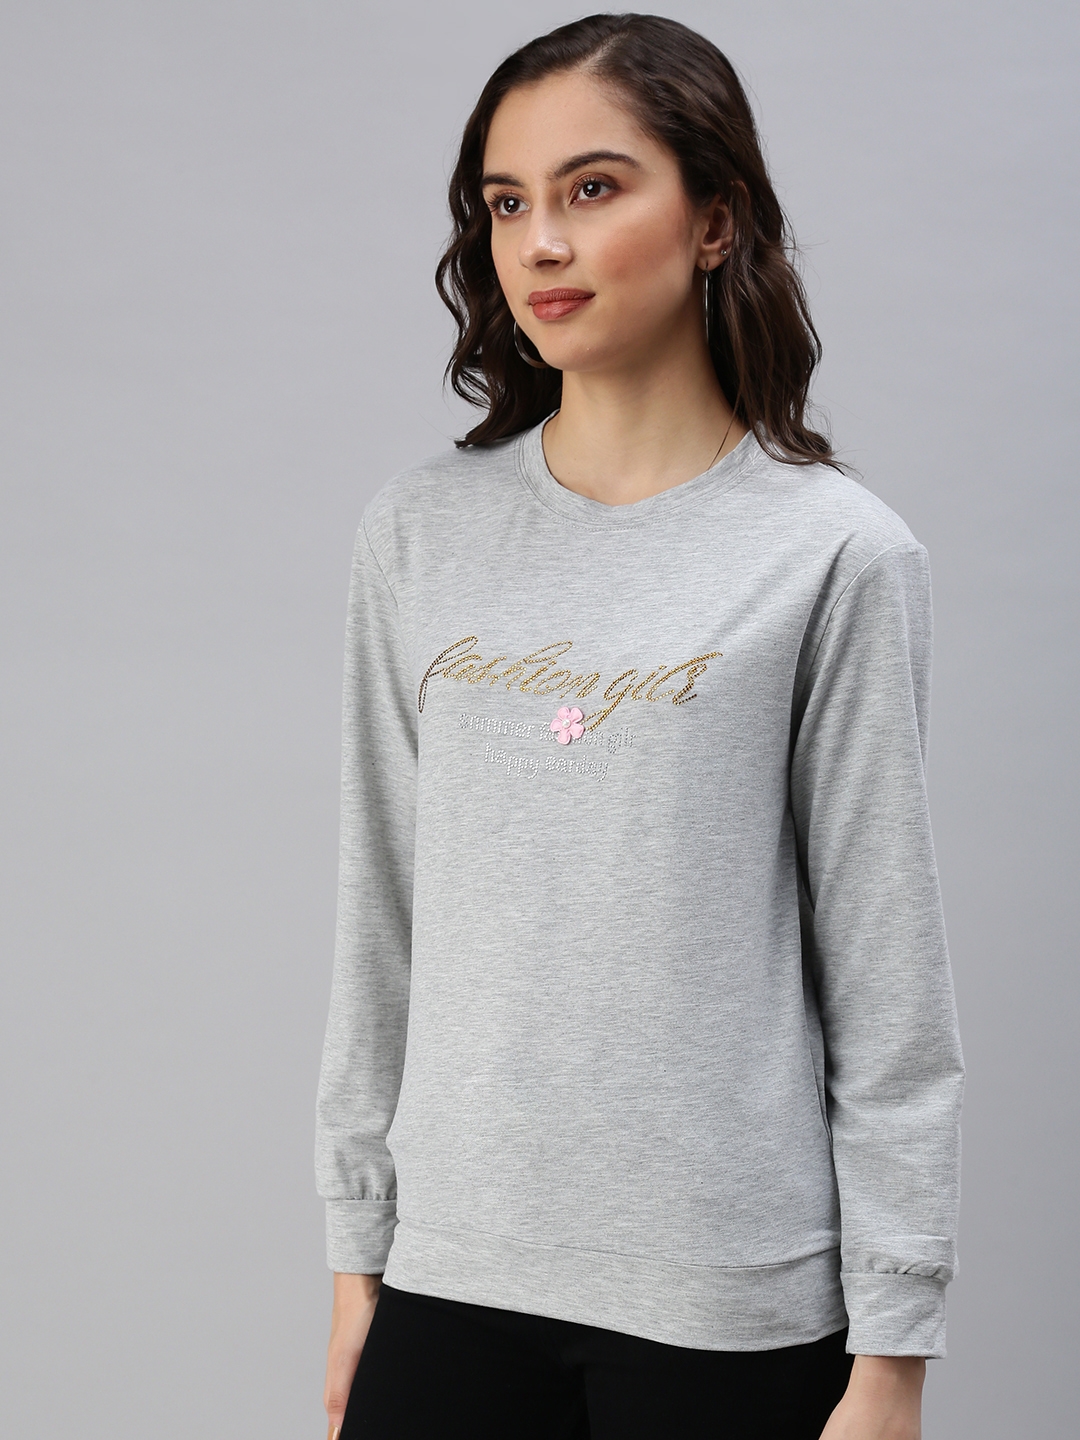 Women's Grey Cotton Solid Sweatshirts